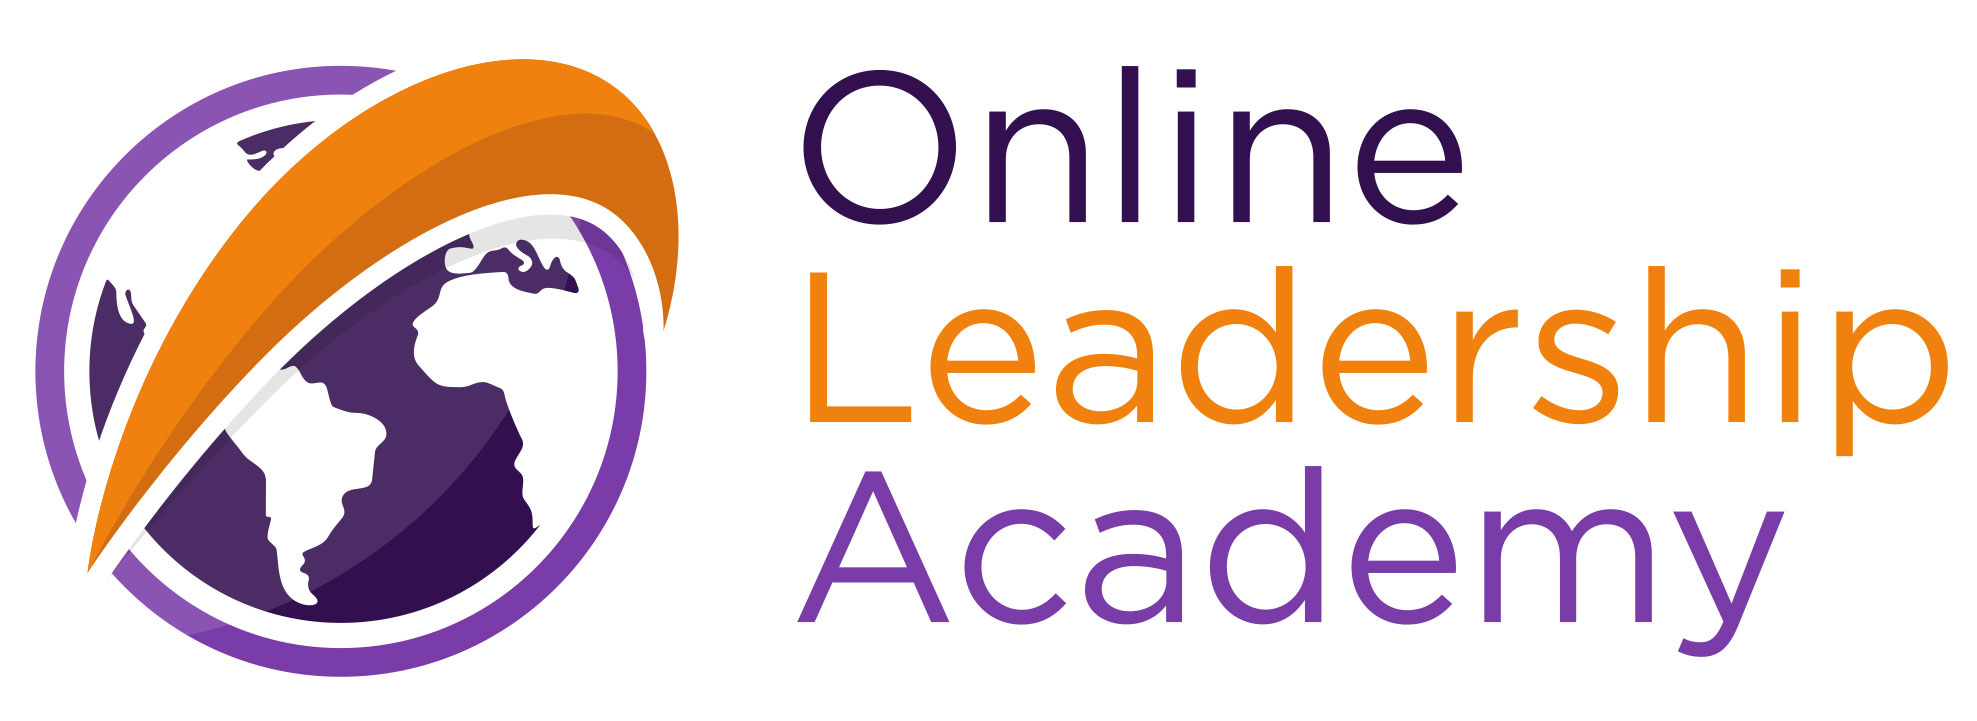 Online Leadership Academy